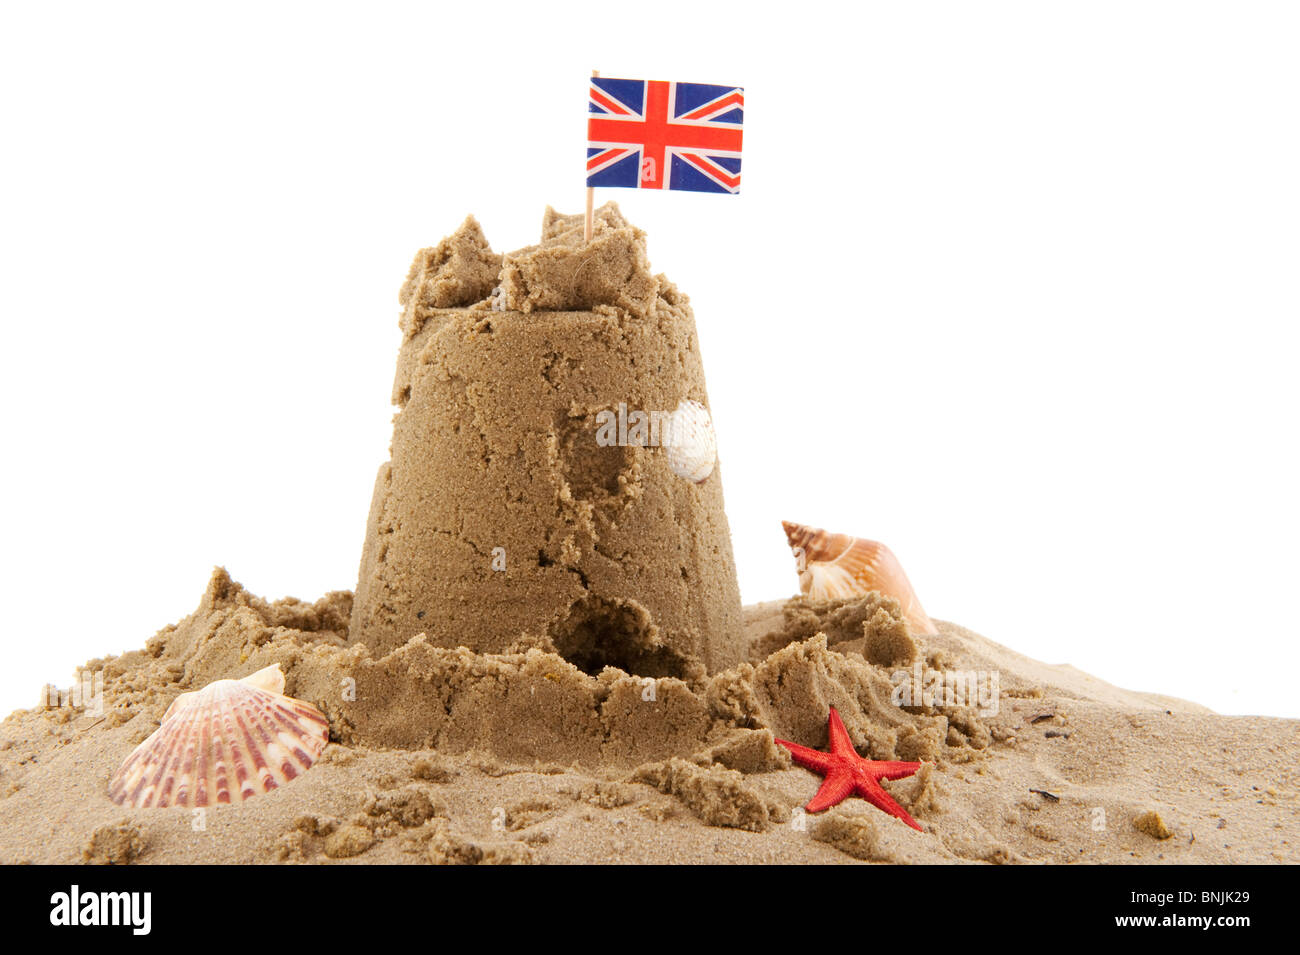 Plage de sable avec château d'Angleterre isolated over white Banque D'Images